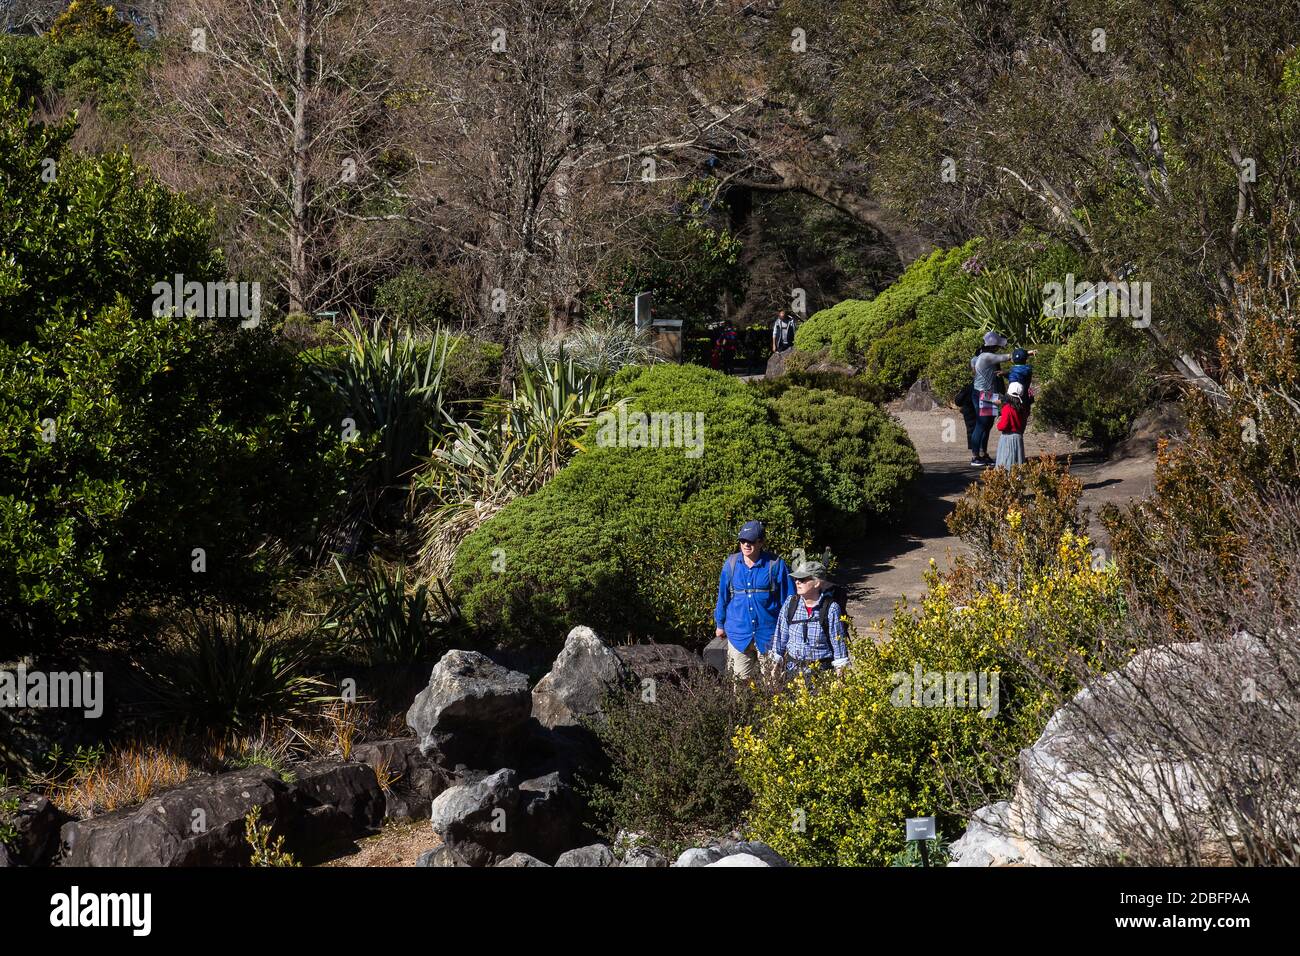 The Blue Mountains Botanic Garden, originally known as Mount Tomah Botanical Garden, is a 28-hectare public botanic garden located approximately 100 k Stock Photo